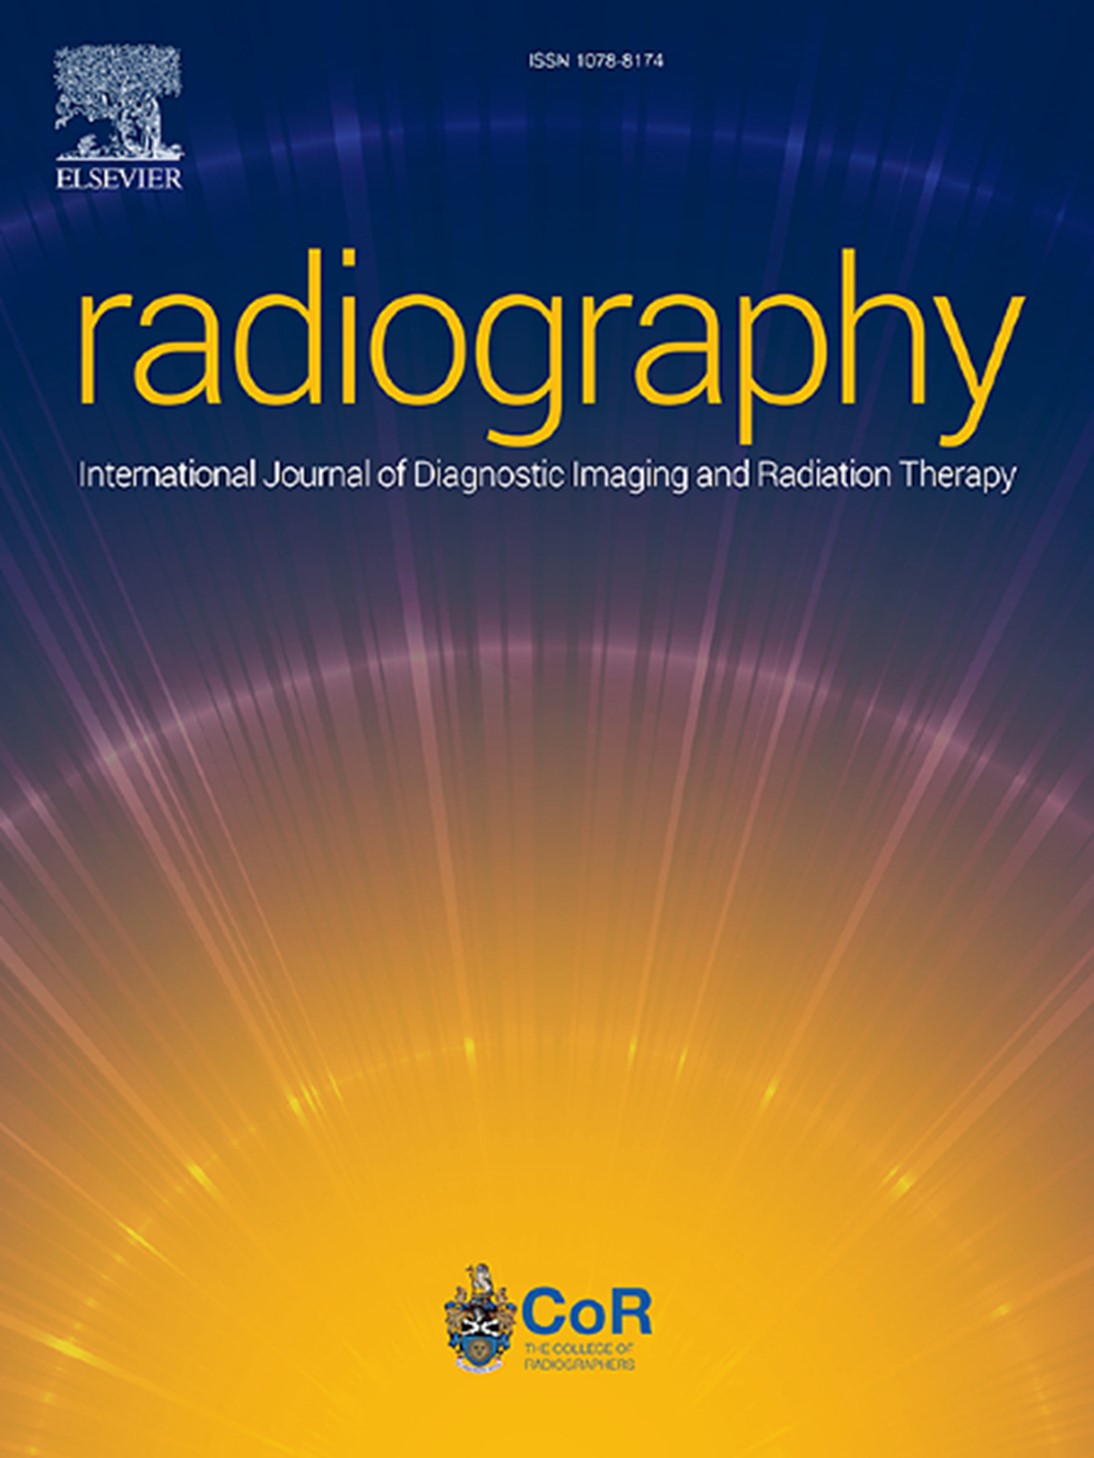 Radiography Journal mar 22